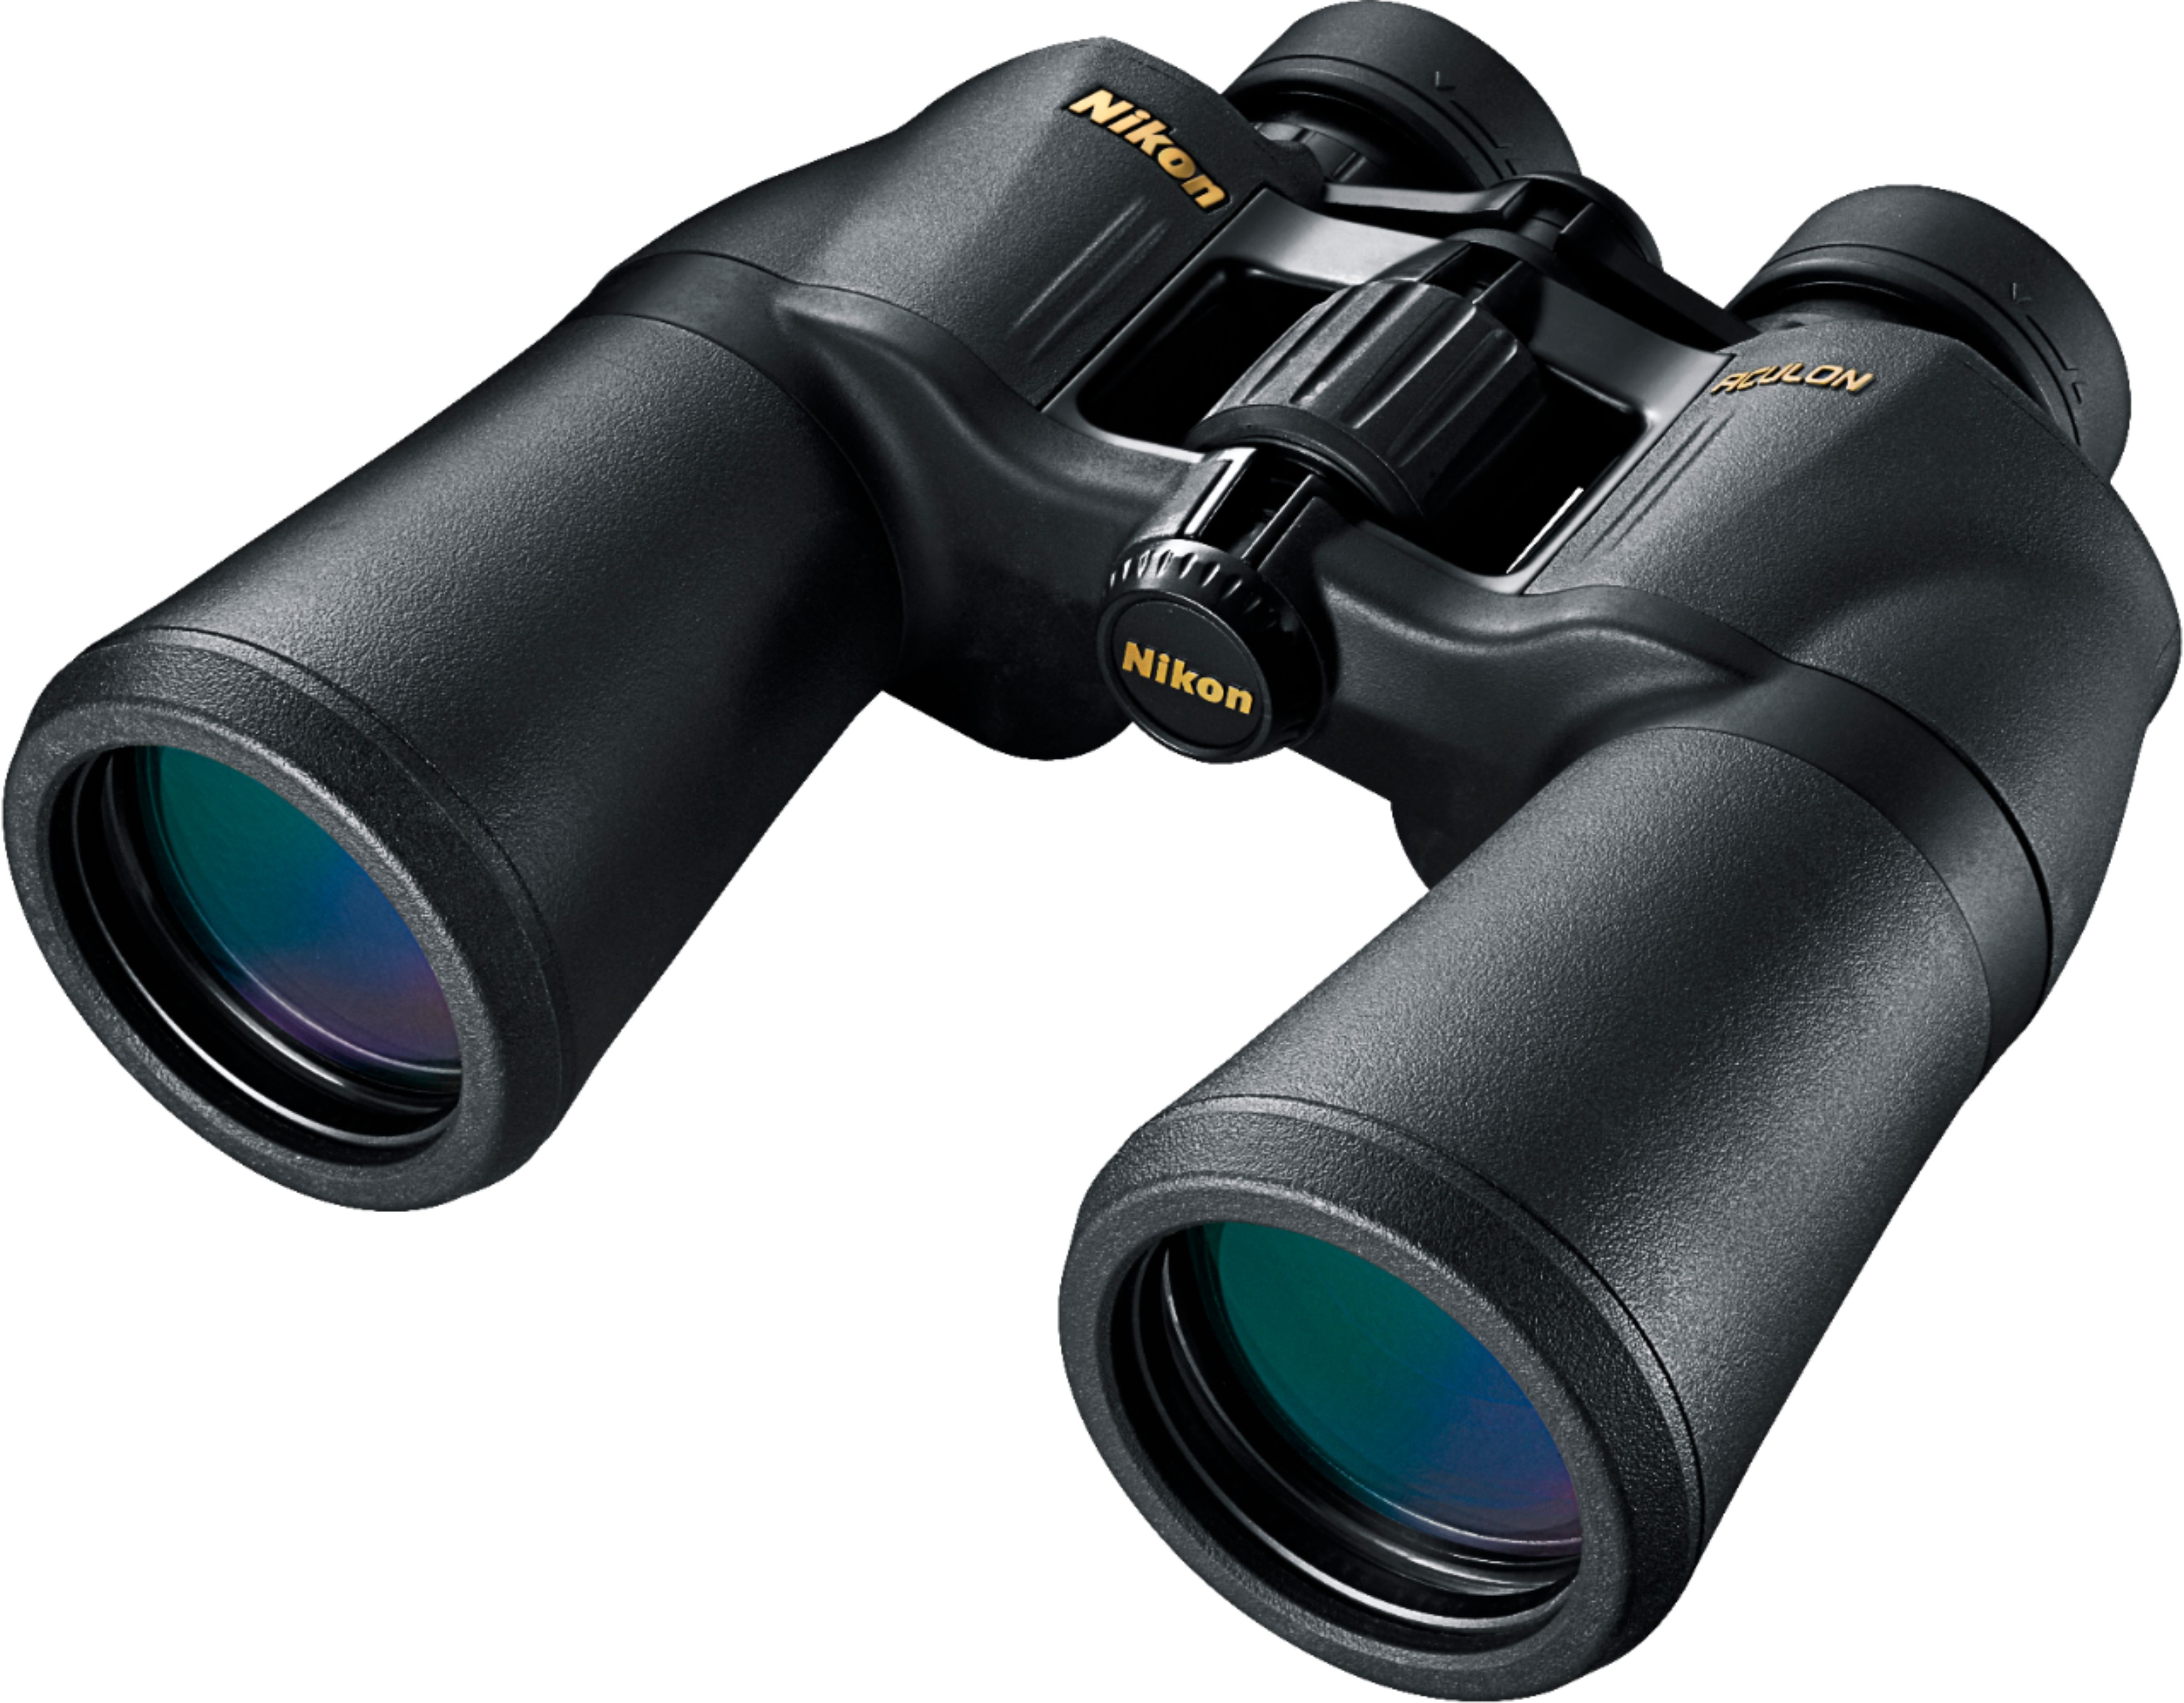 Angle View: Nikon - ACULON 12 x 50 Binoculars - Black